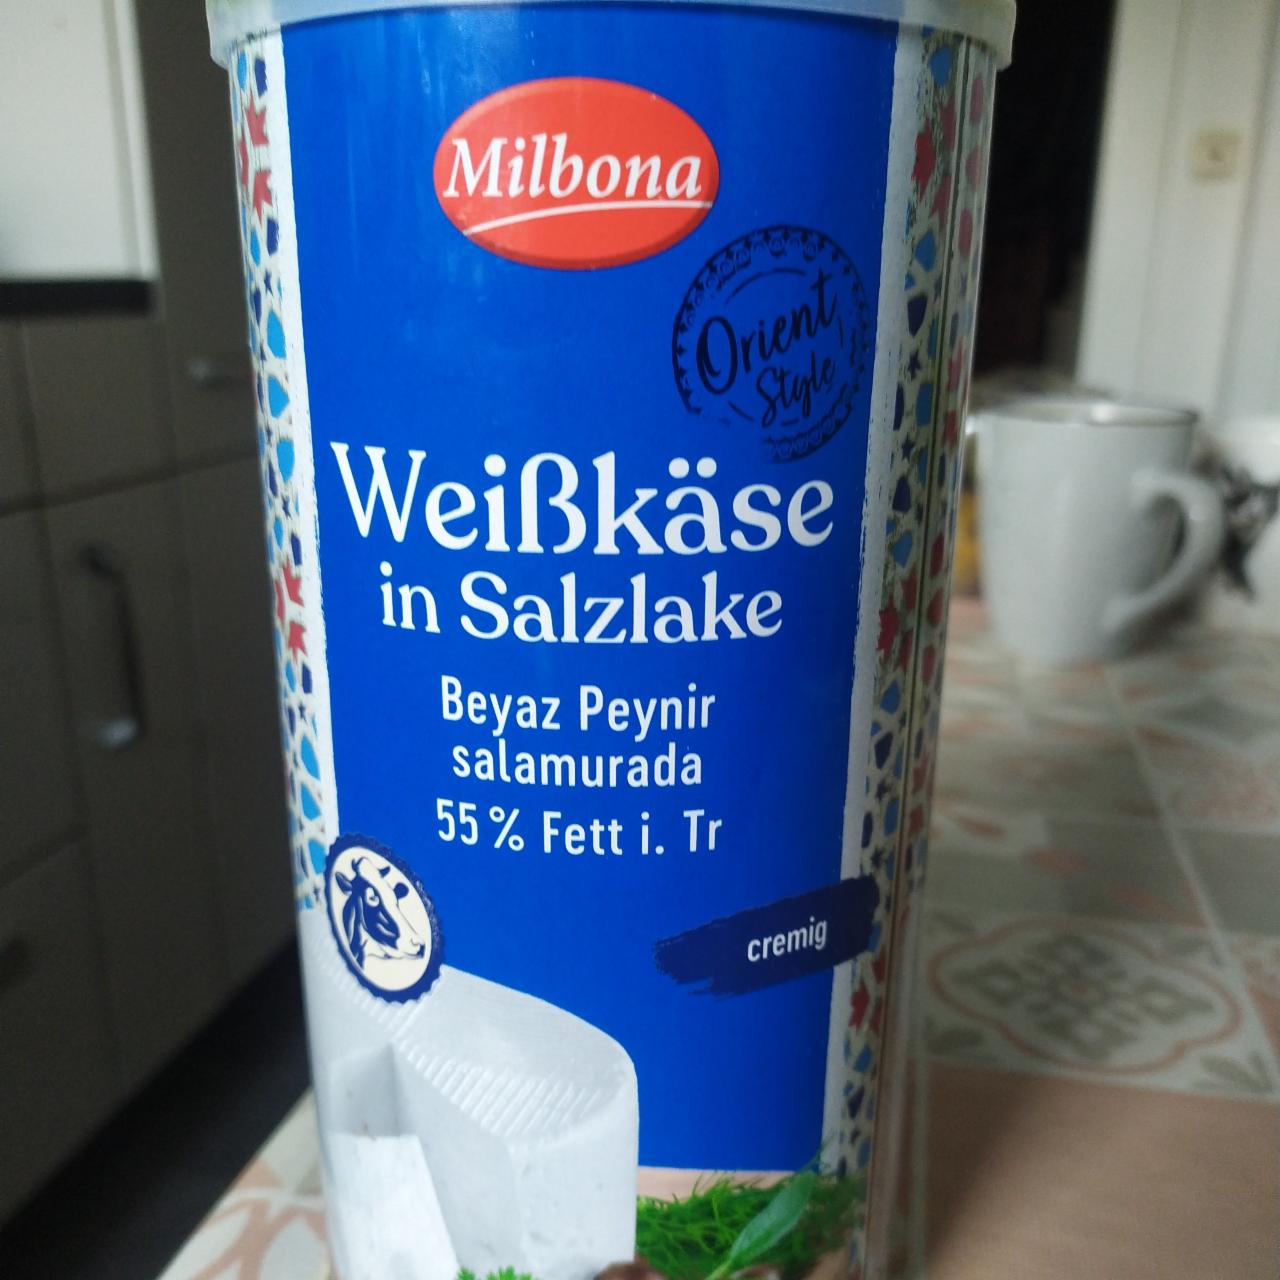 Weißkäse in Salzlake Milbona - калорийность, пищевая ценность ⋙